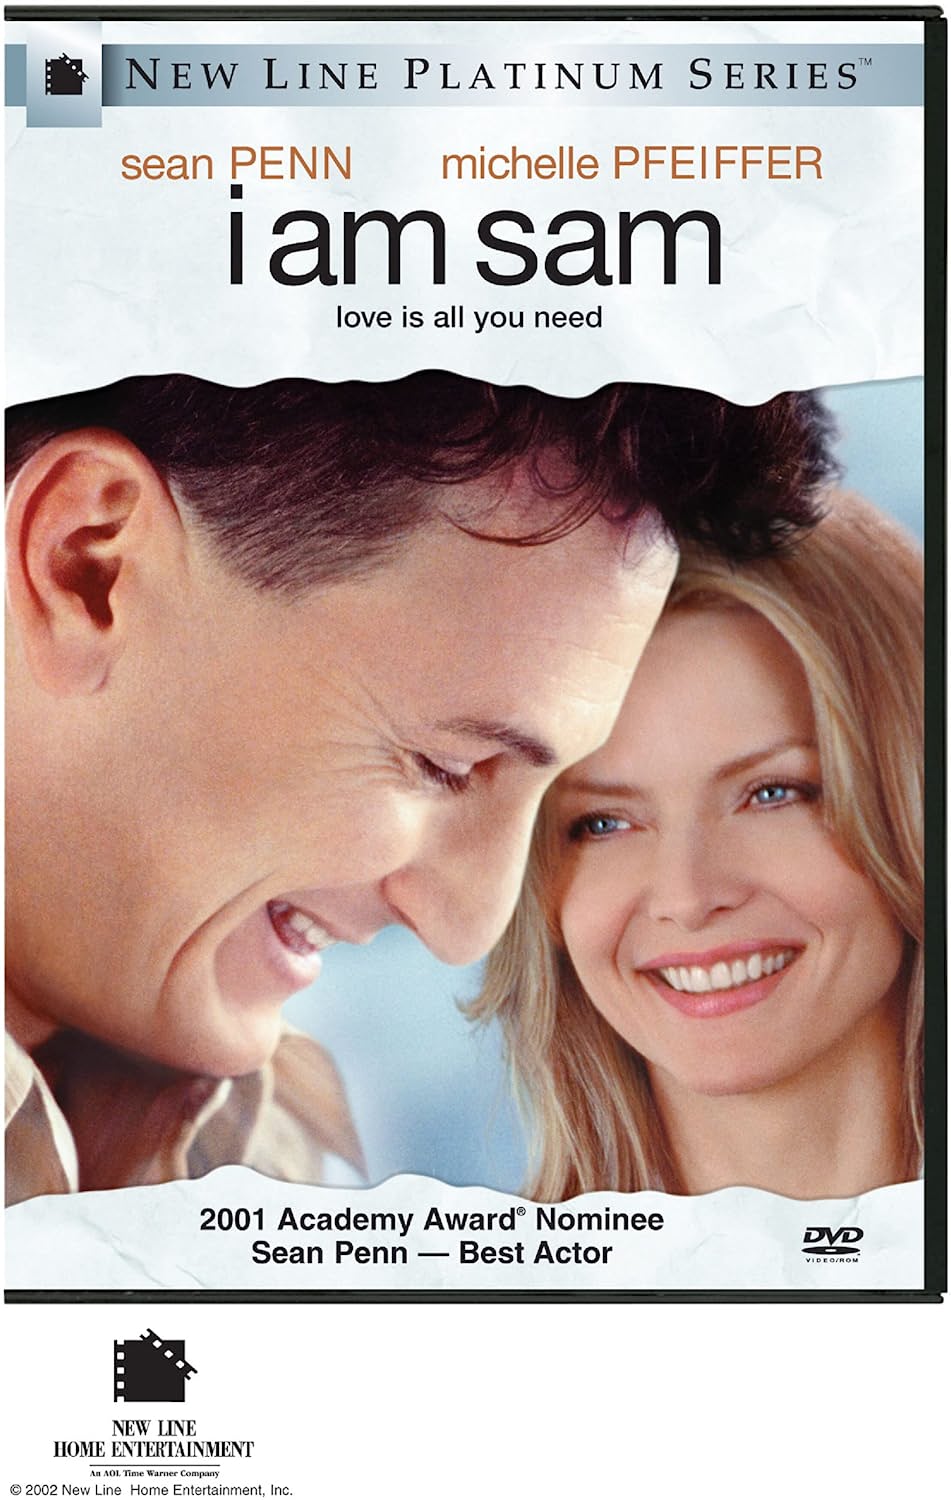 I Am Sam - DVD [ 2002 ]  - Comedy Movies On DVD - Movies On GRUV